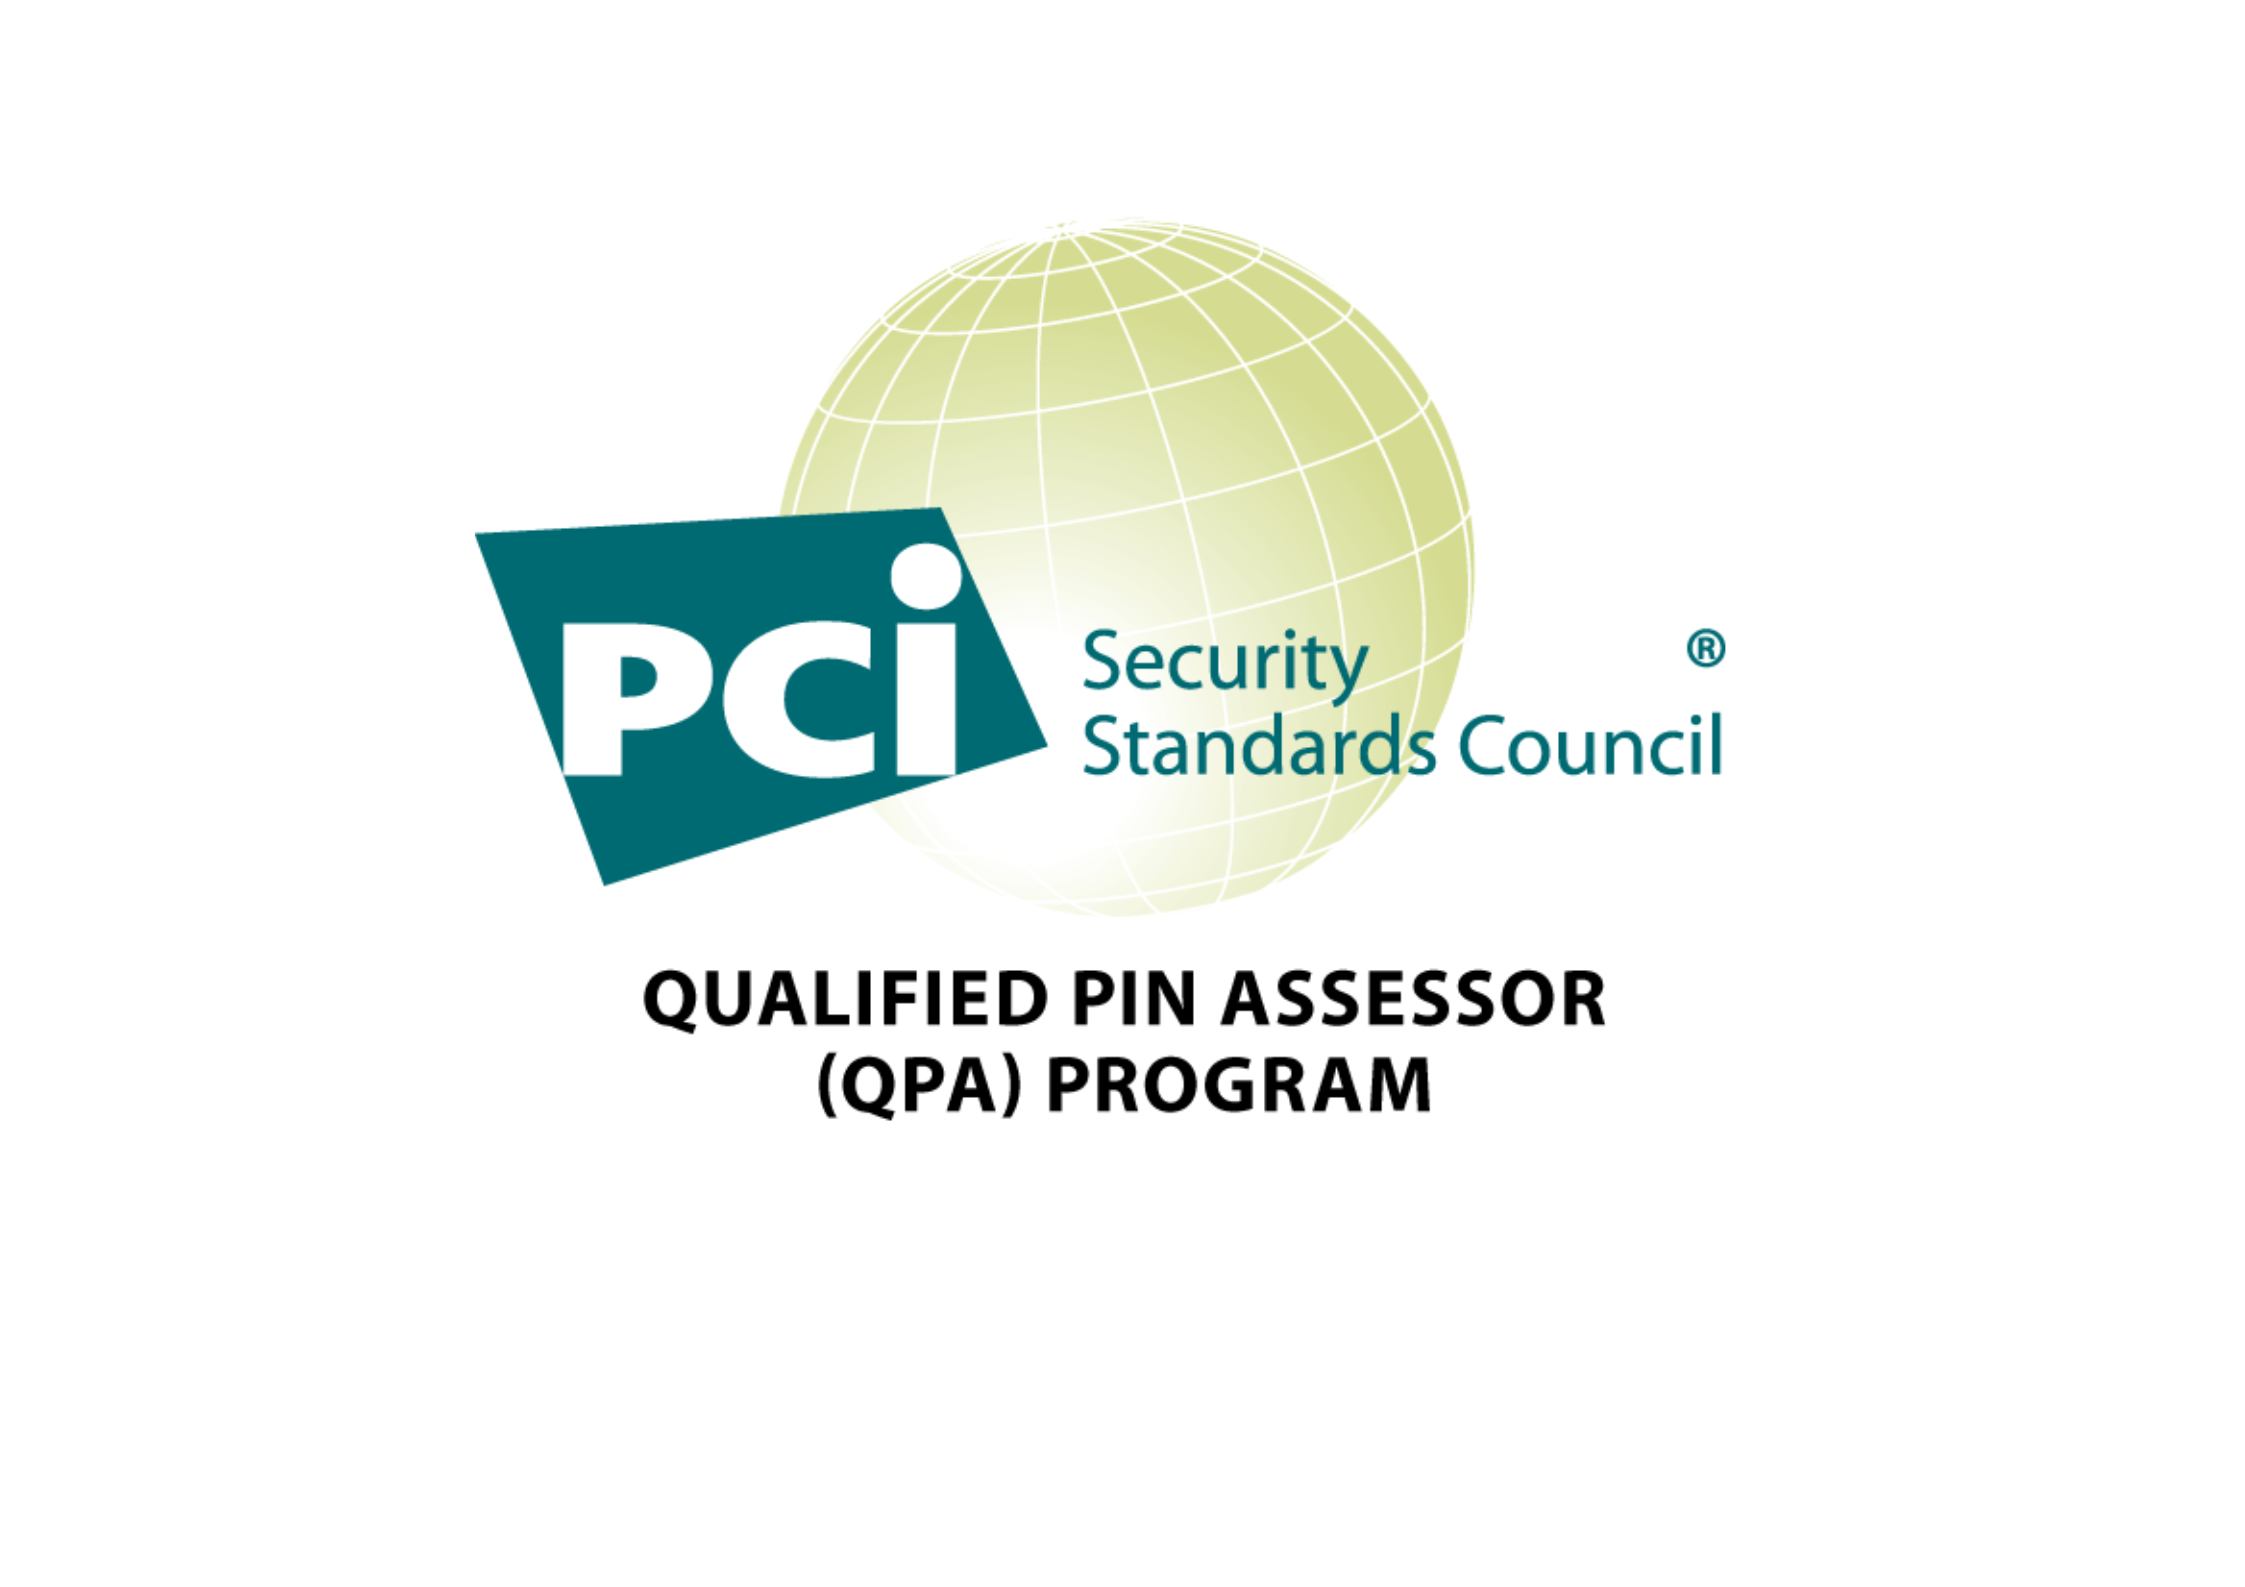 Qualified PIN Assessor Program